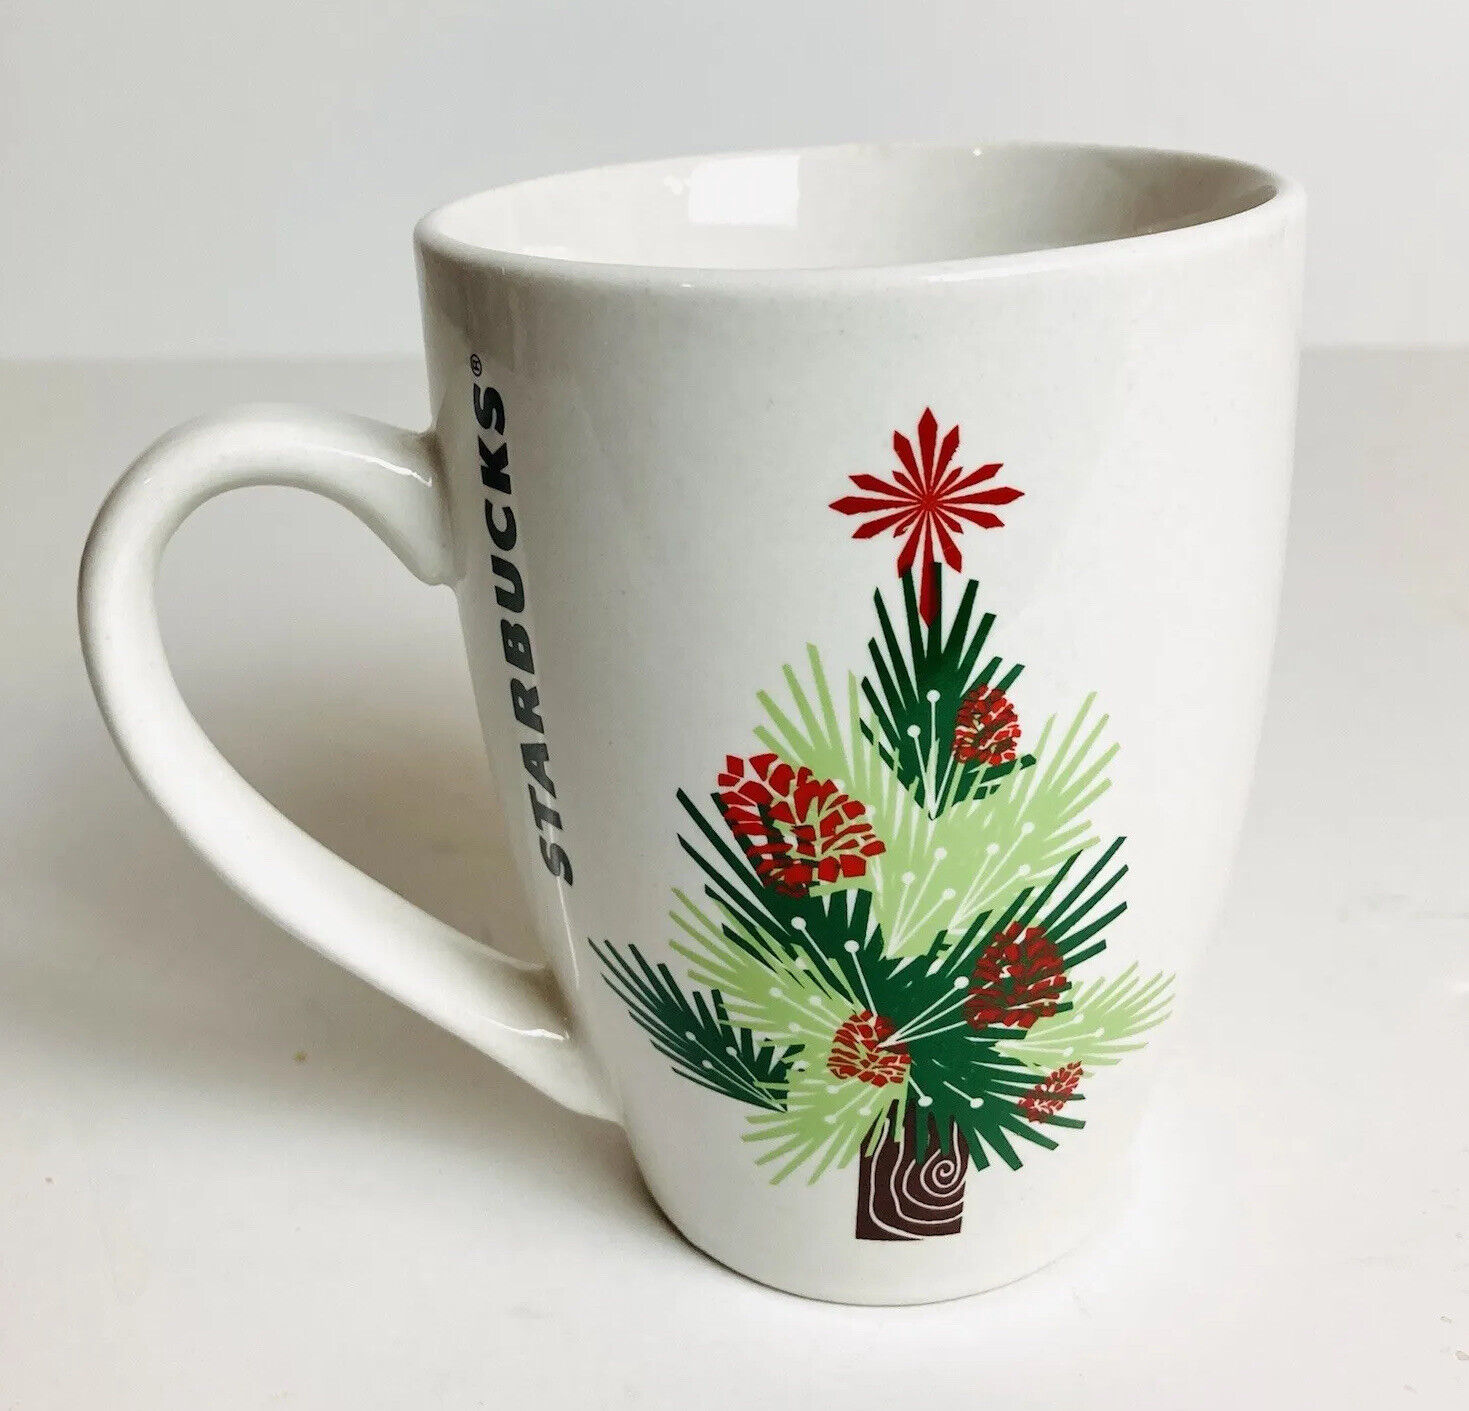 Starbucks Christmas Tree Holiday Mug White Coffee Mugs 16 oz Cup 2011